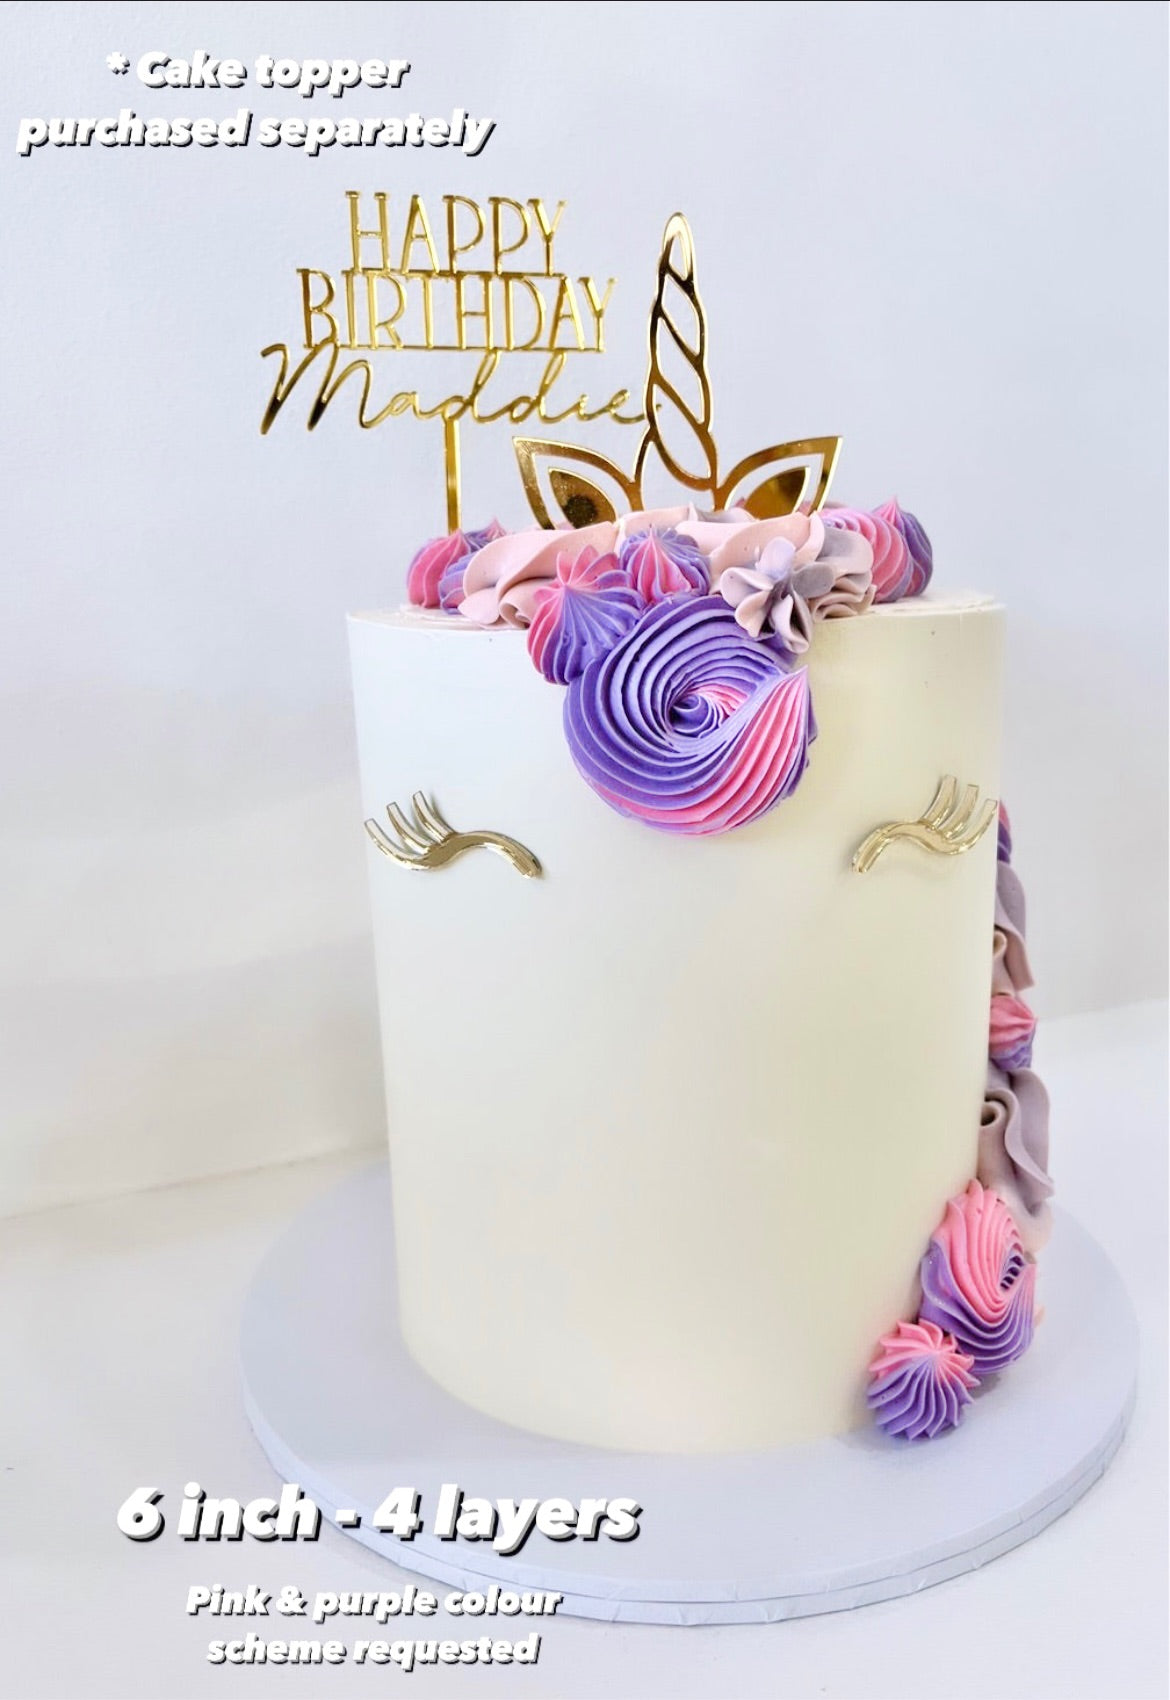 121) 7th Custom Cakes Design Ideas | Charm's Cakes and Cupcakes